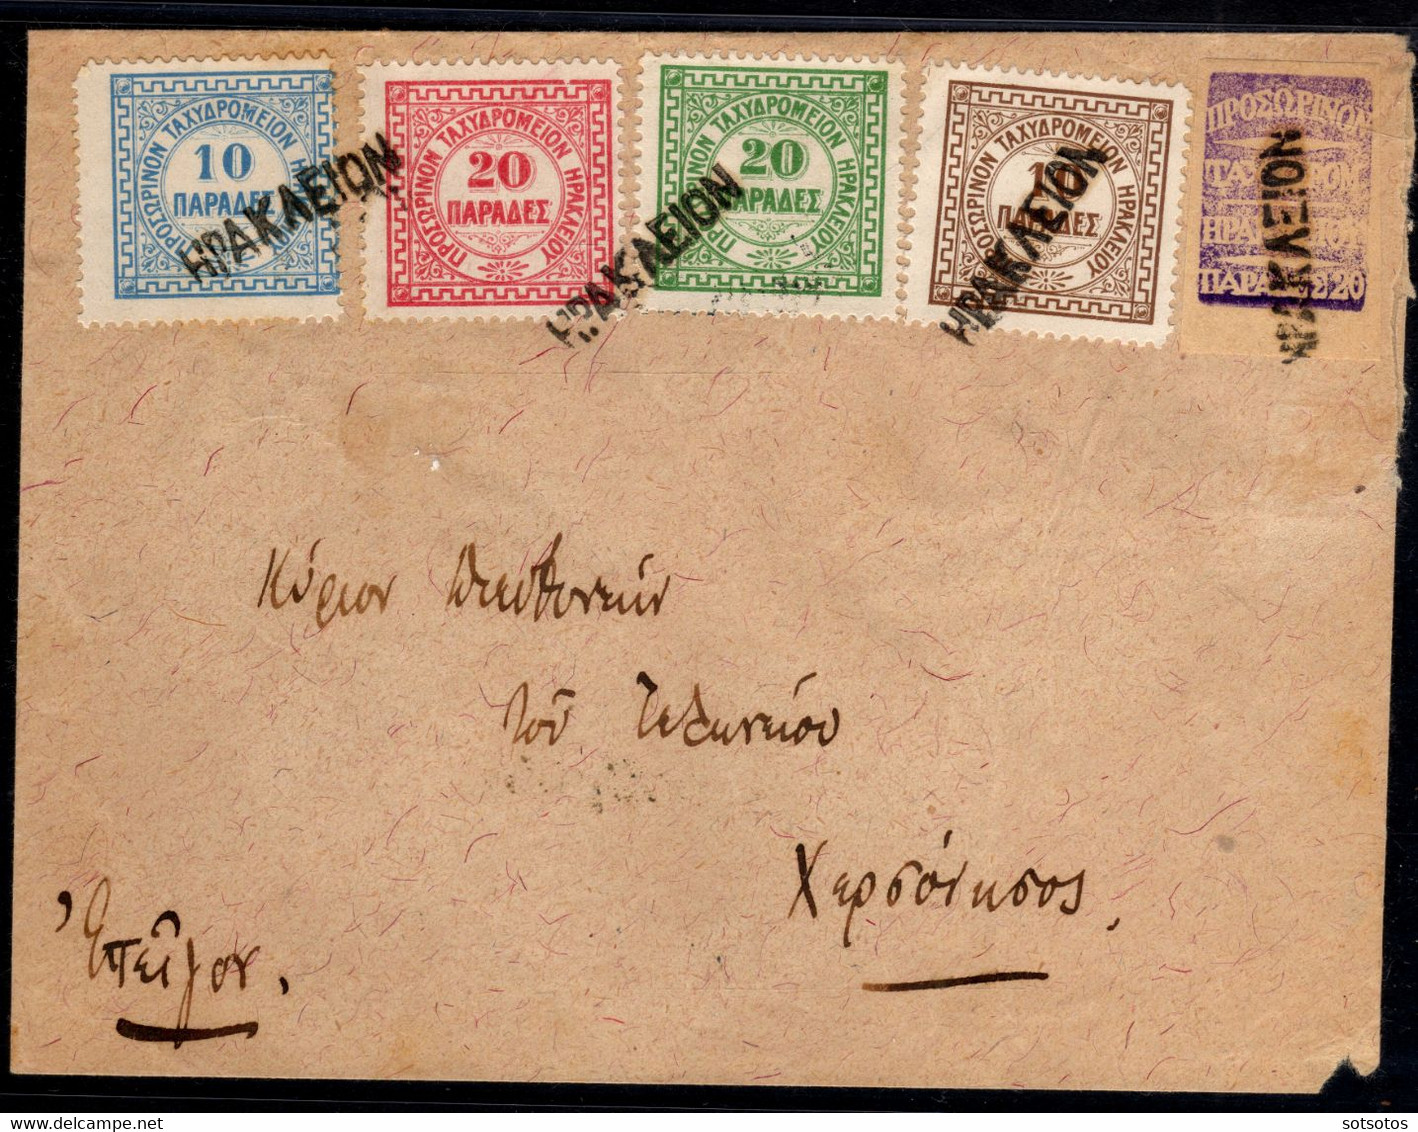 CRETE 1898: The Rarest Cover Of Cretan Post Offices, Bearing All 5 Stamps Of The British Post Office In Crete - Creta